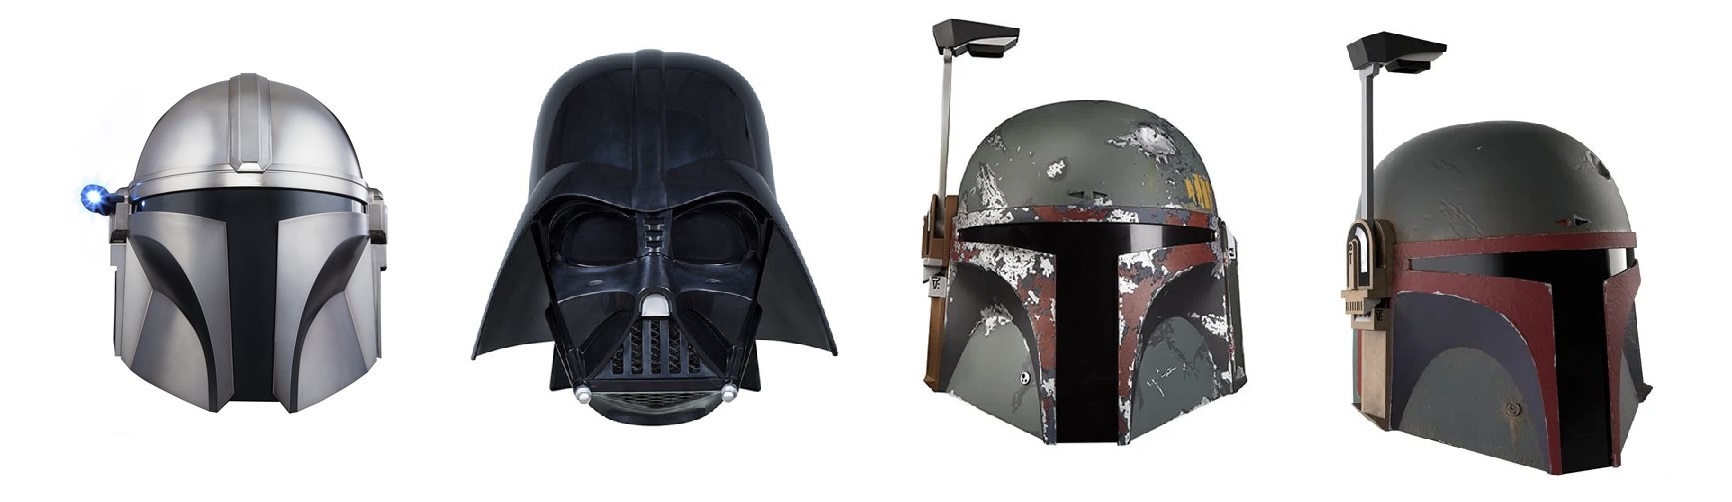 Star Wars Helmet Replicas